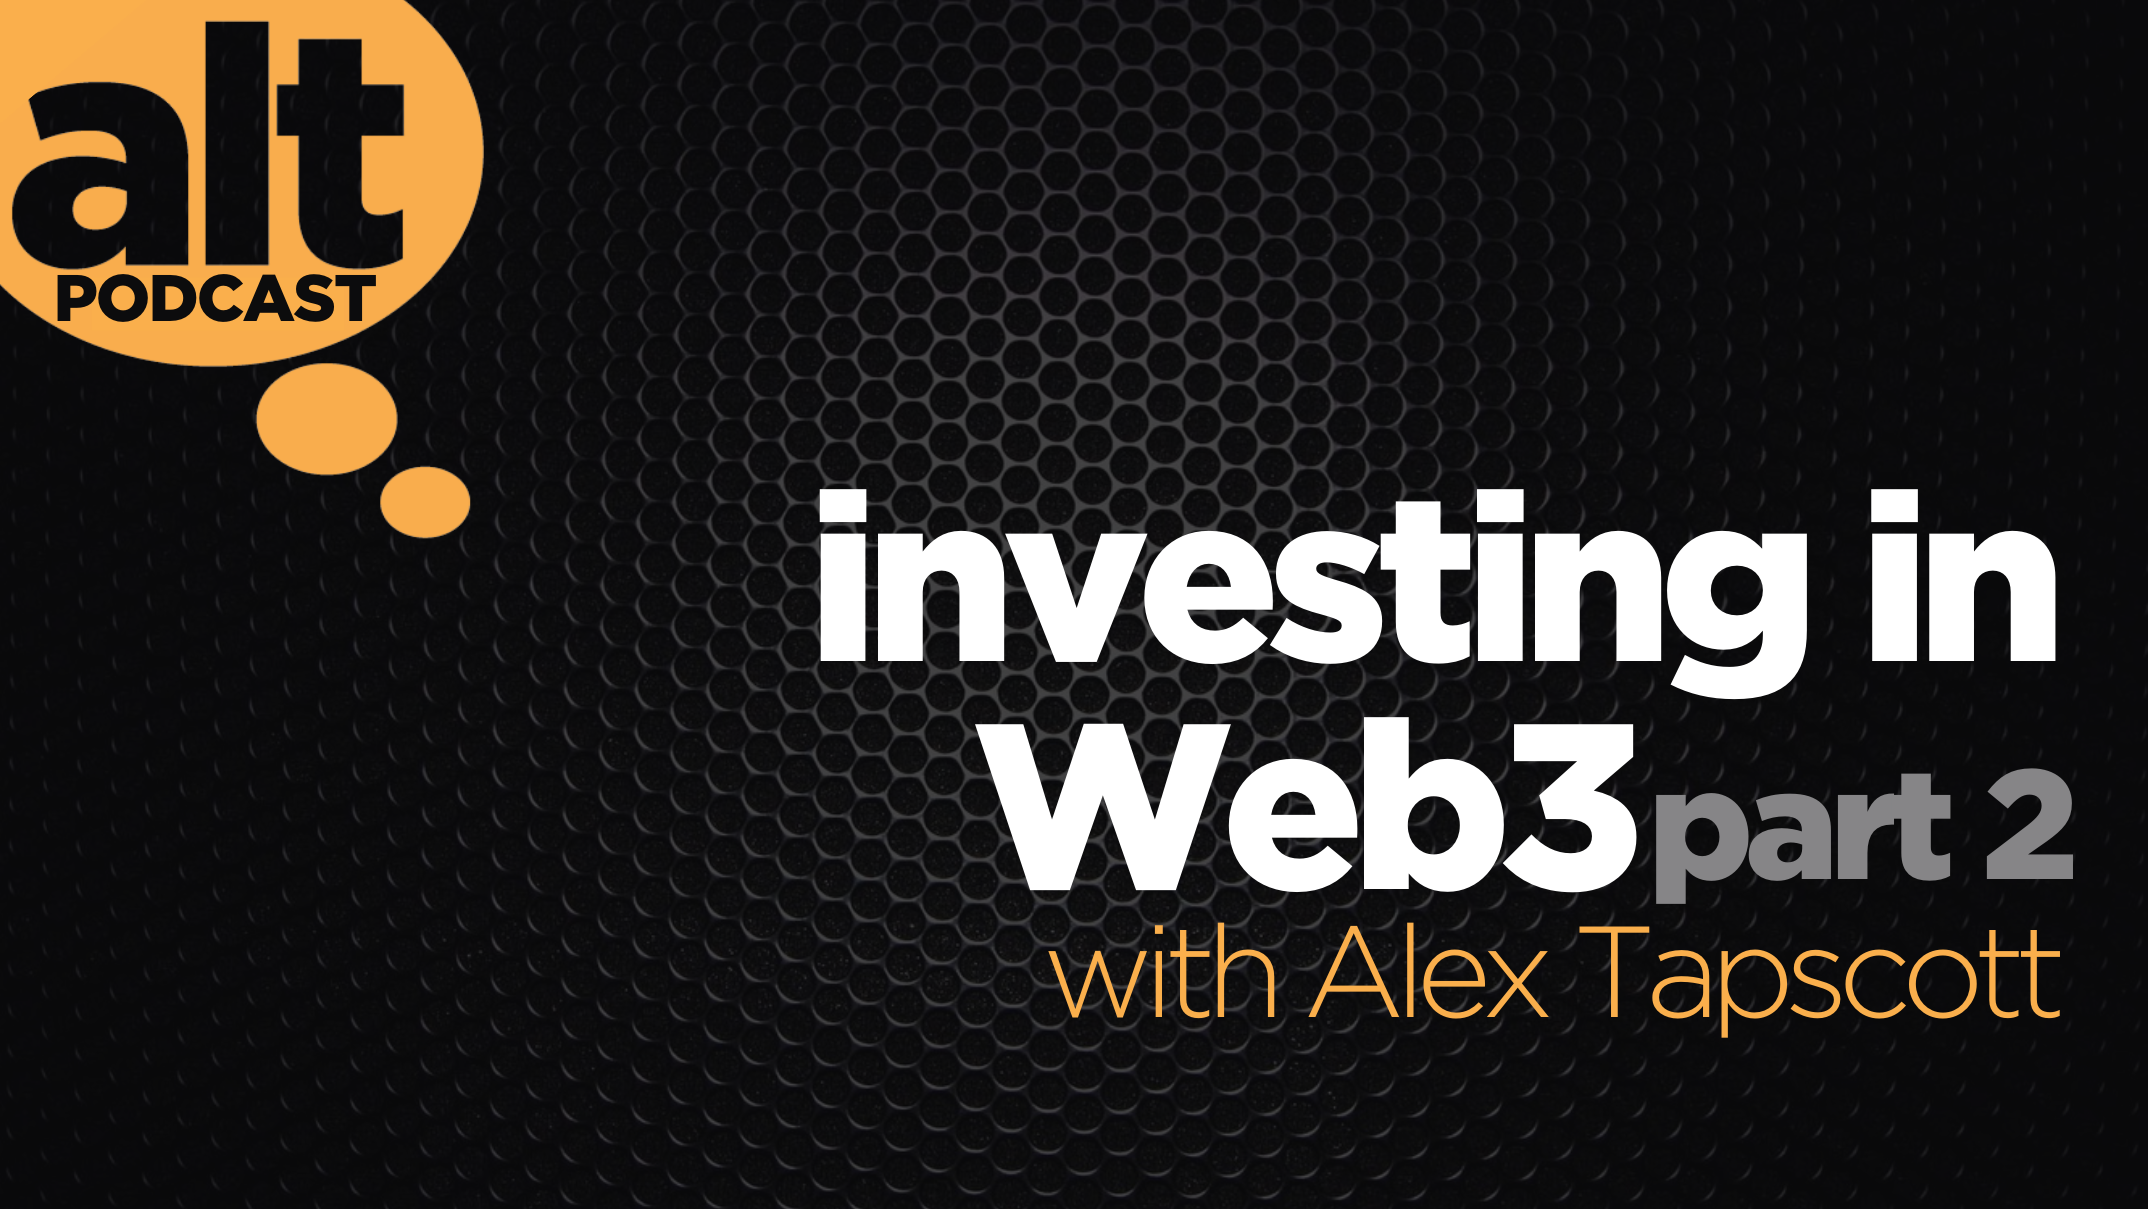 Alt Thinking Podcast: Investing in Web3 with Alex Tapscott Part 2